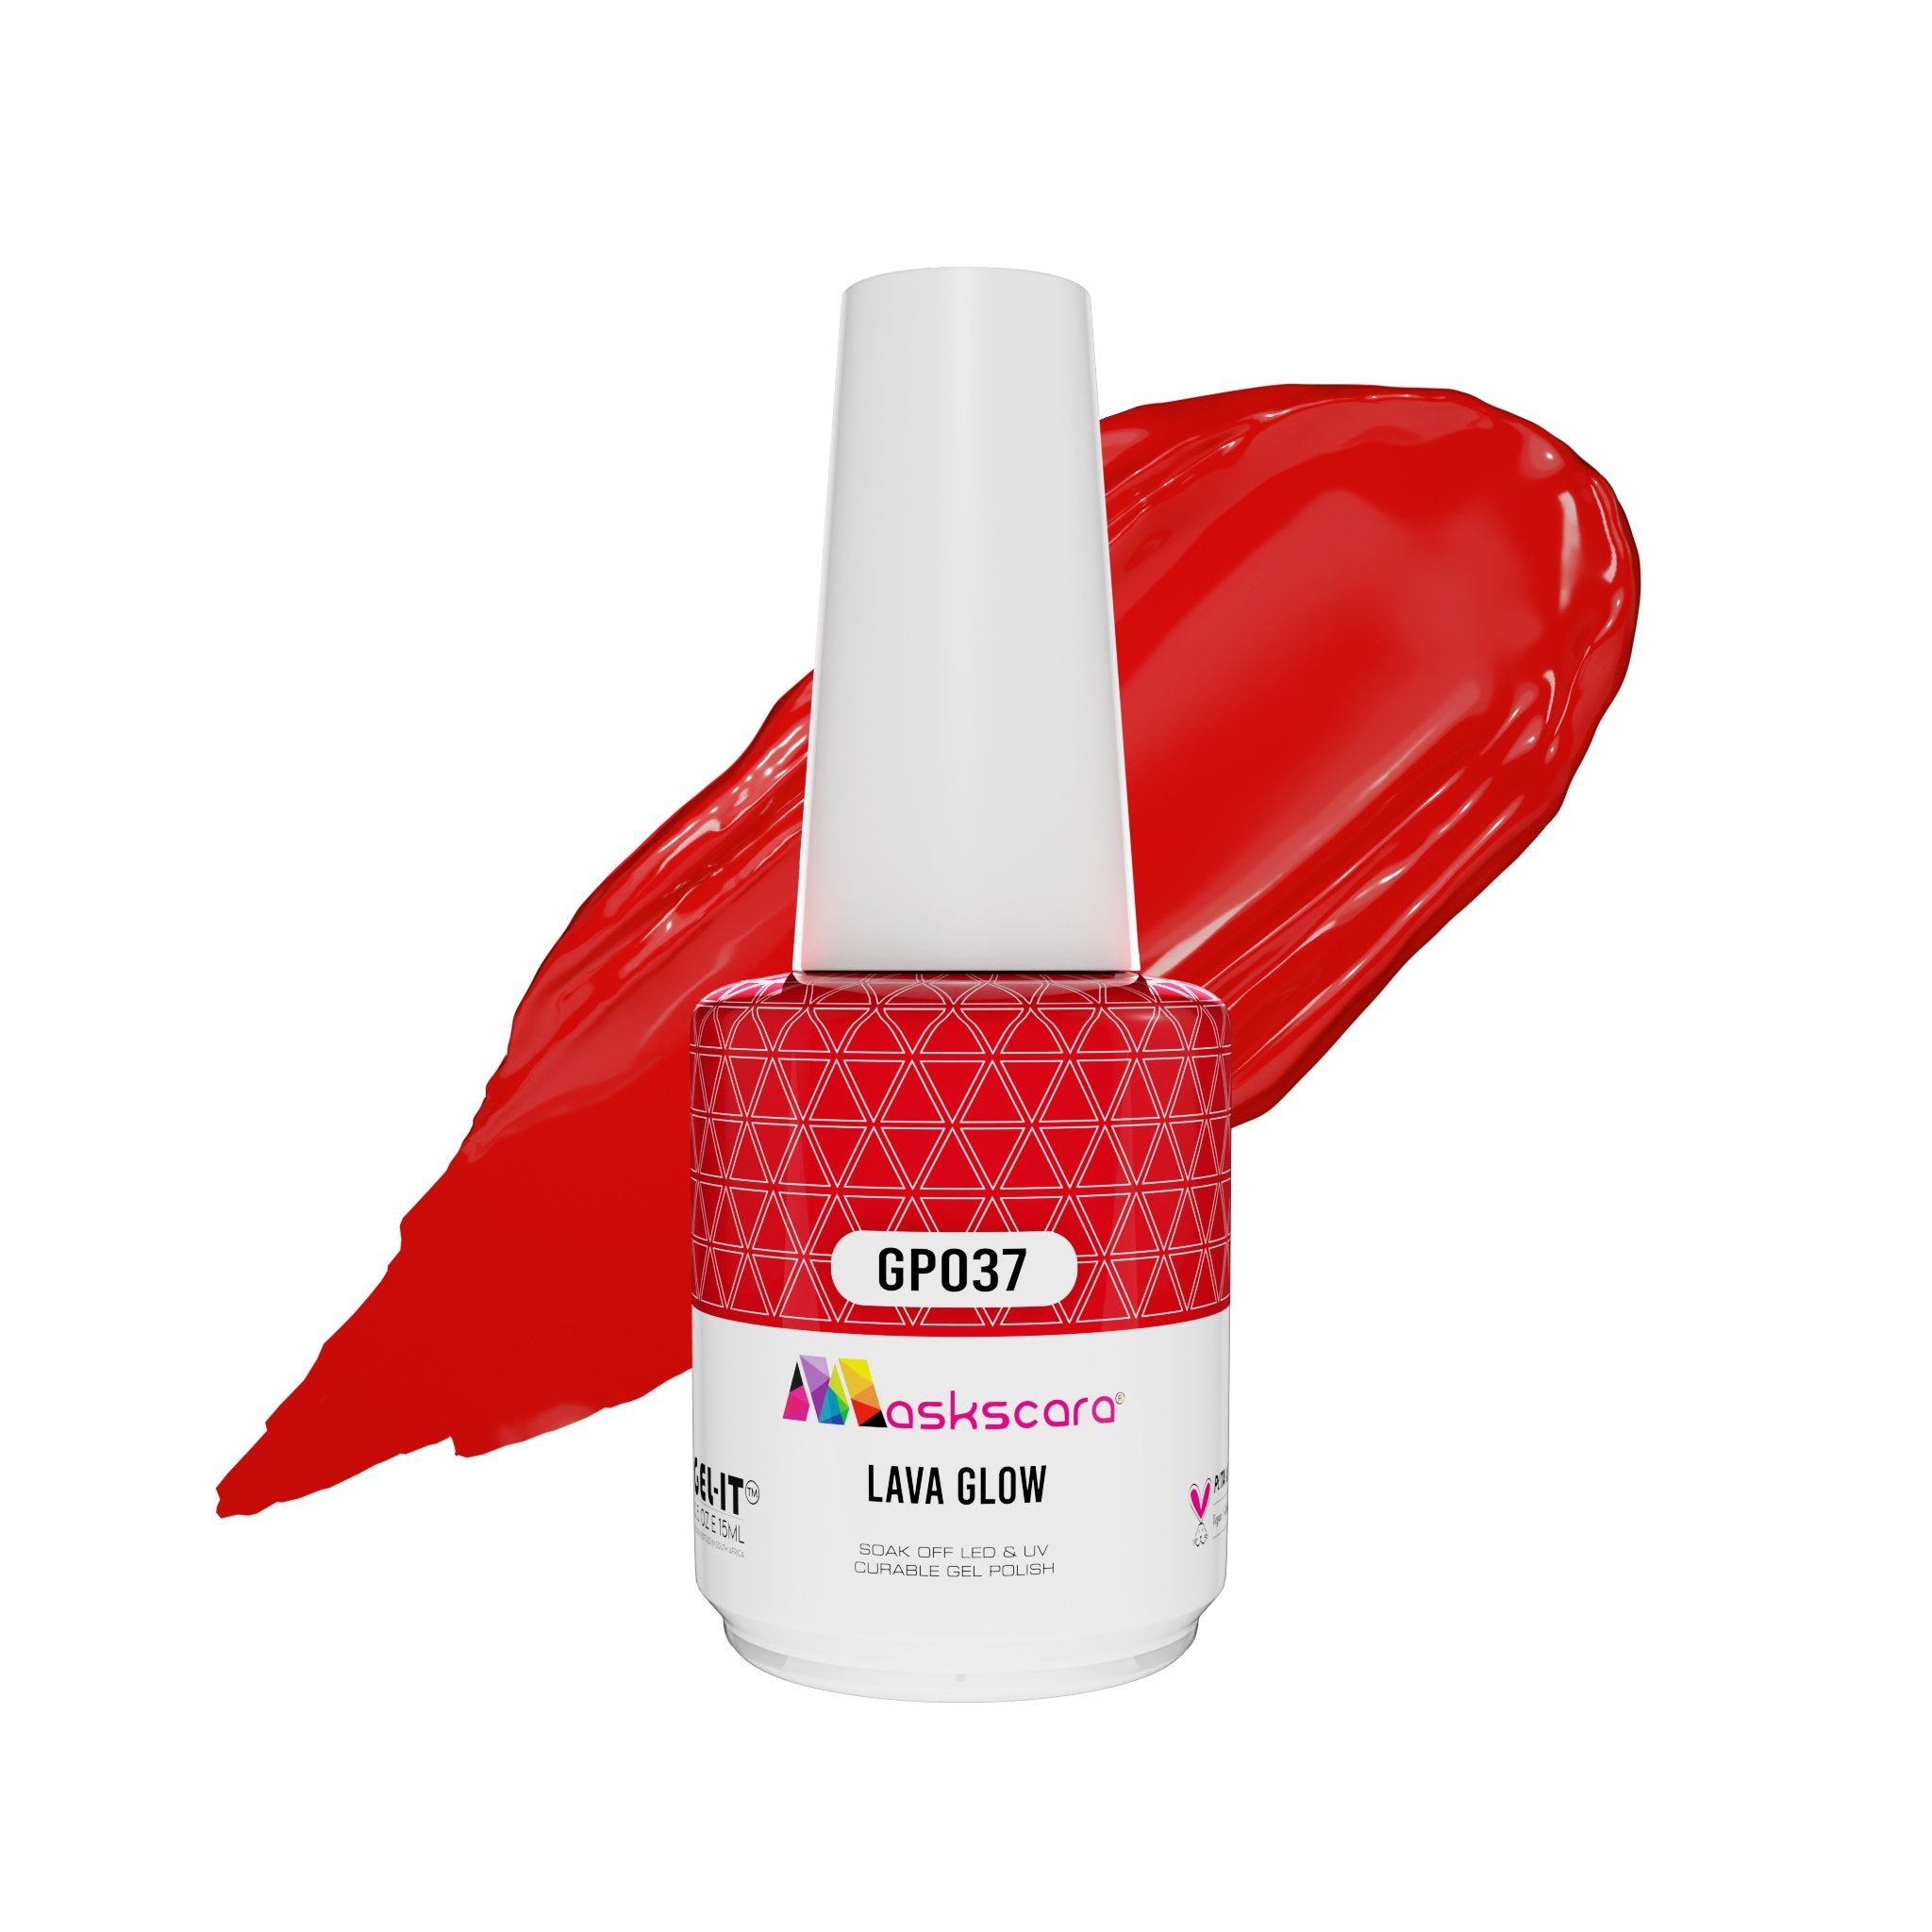 <img scr = “ GP037 Lava Glow.jpeg” alt = “Chilli Red gel polish colour by the brand Maskscara”>